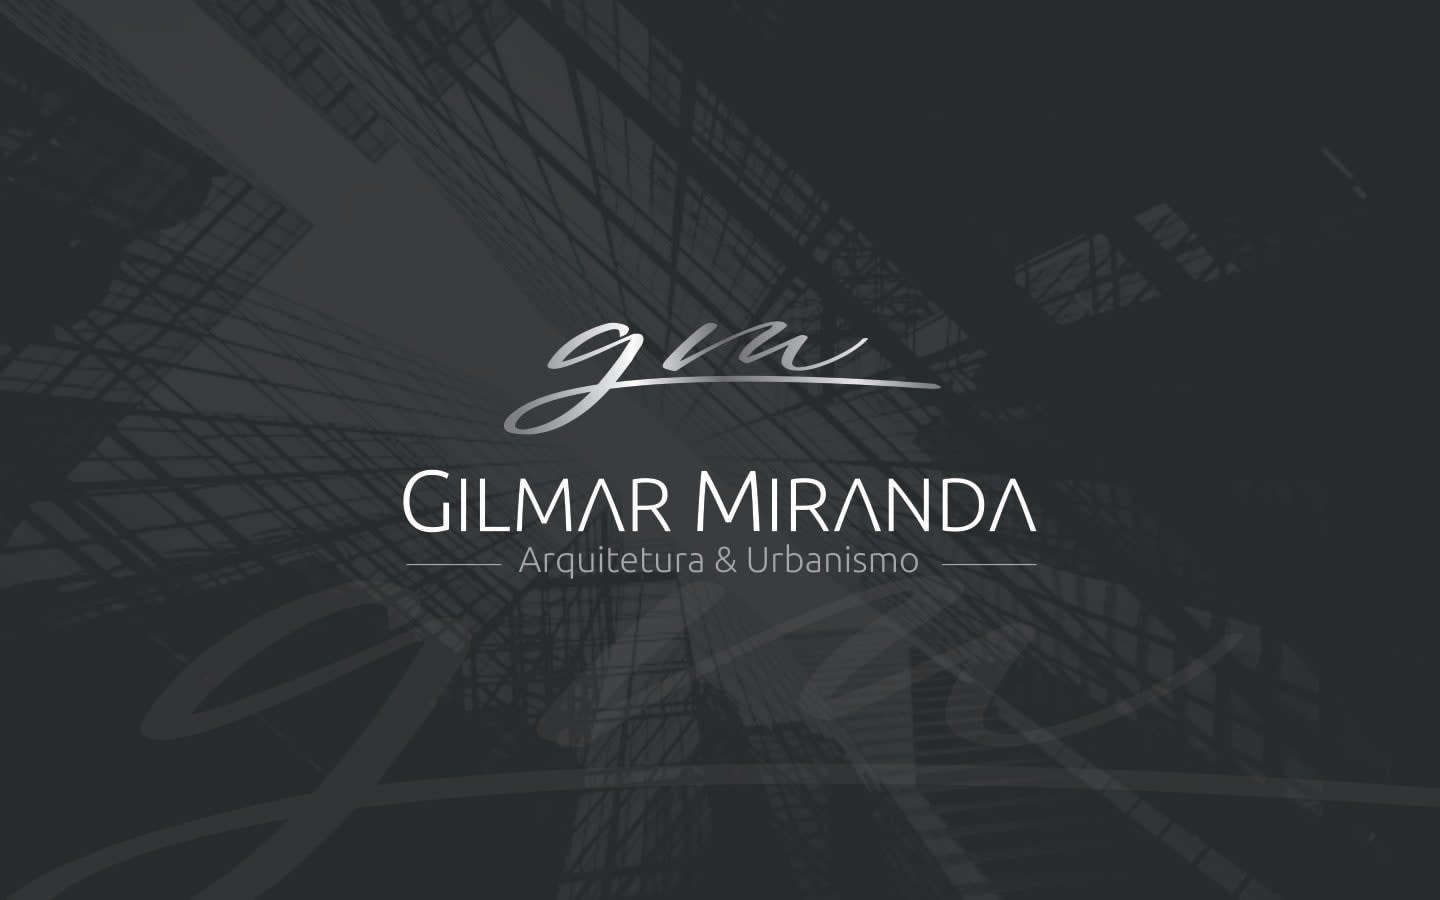 Gilmar Miranda Arquitetura & Urbanismo